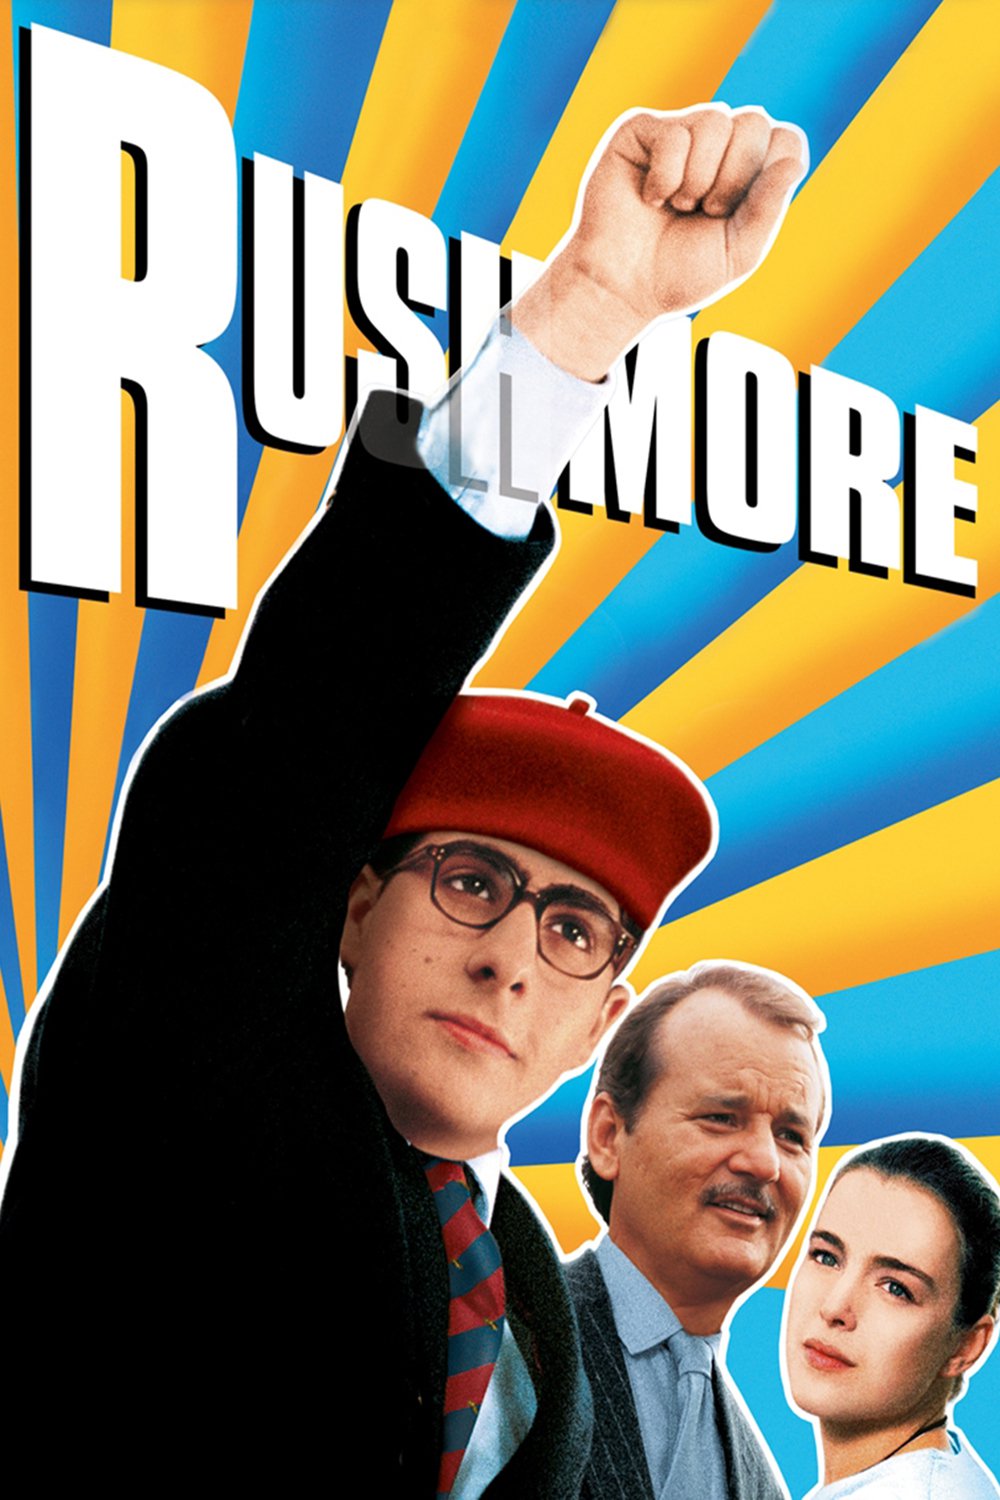 Plakat von "Rushmore"